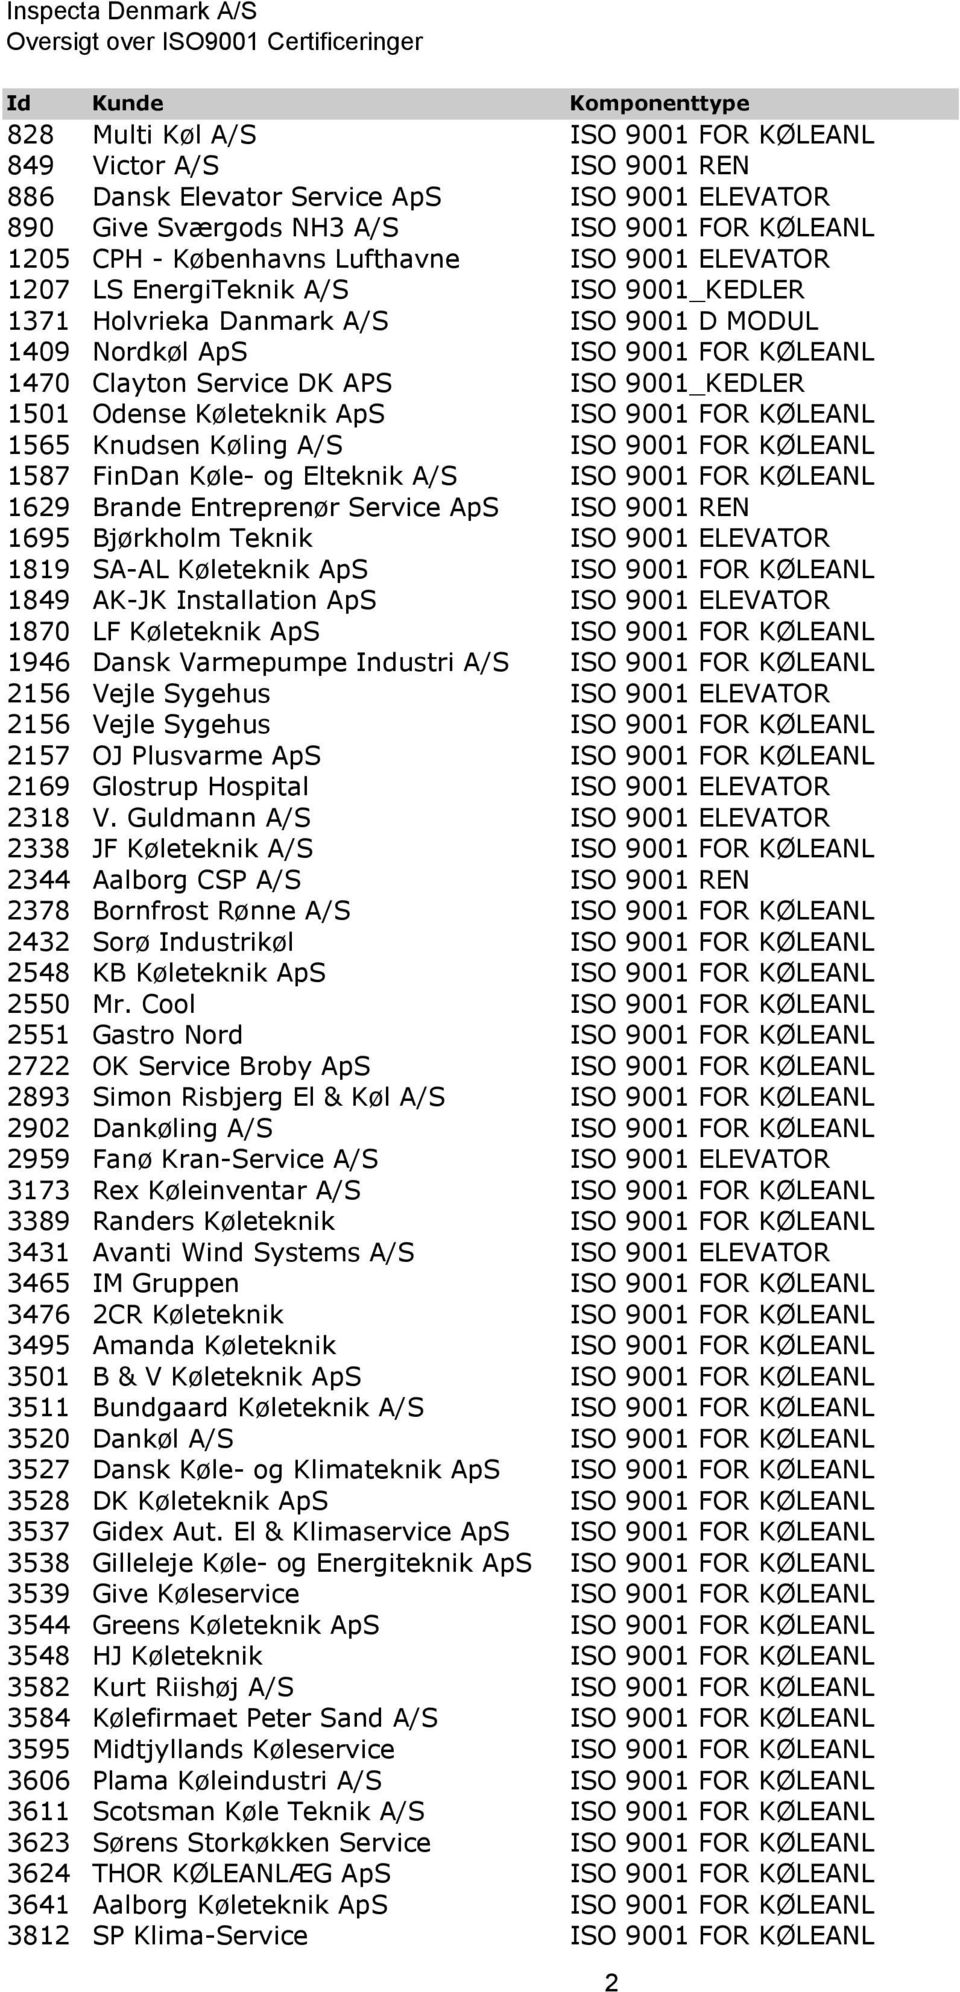 Køleteknik ApS ISO 9001 FOR KØLEANL 1565 Knudsen Køling A/S ISO 9001 FOR KØLEANL 1587 FinDan Køle- og Elteknik A/S ISO 9001 FOR KØLEANL 1629 Brande Entreprenør Service ApS ISO 9001 REN 1695 Bjørkholm